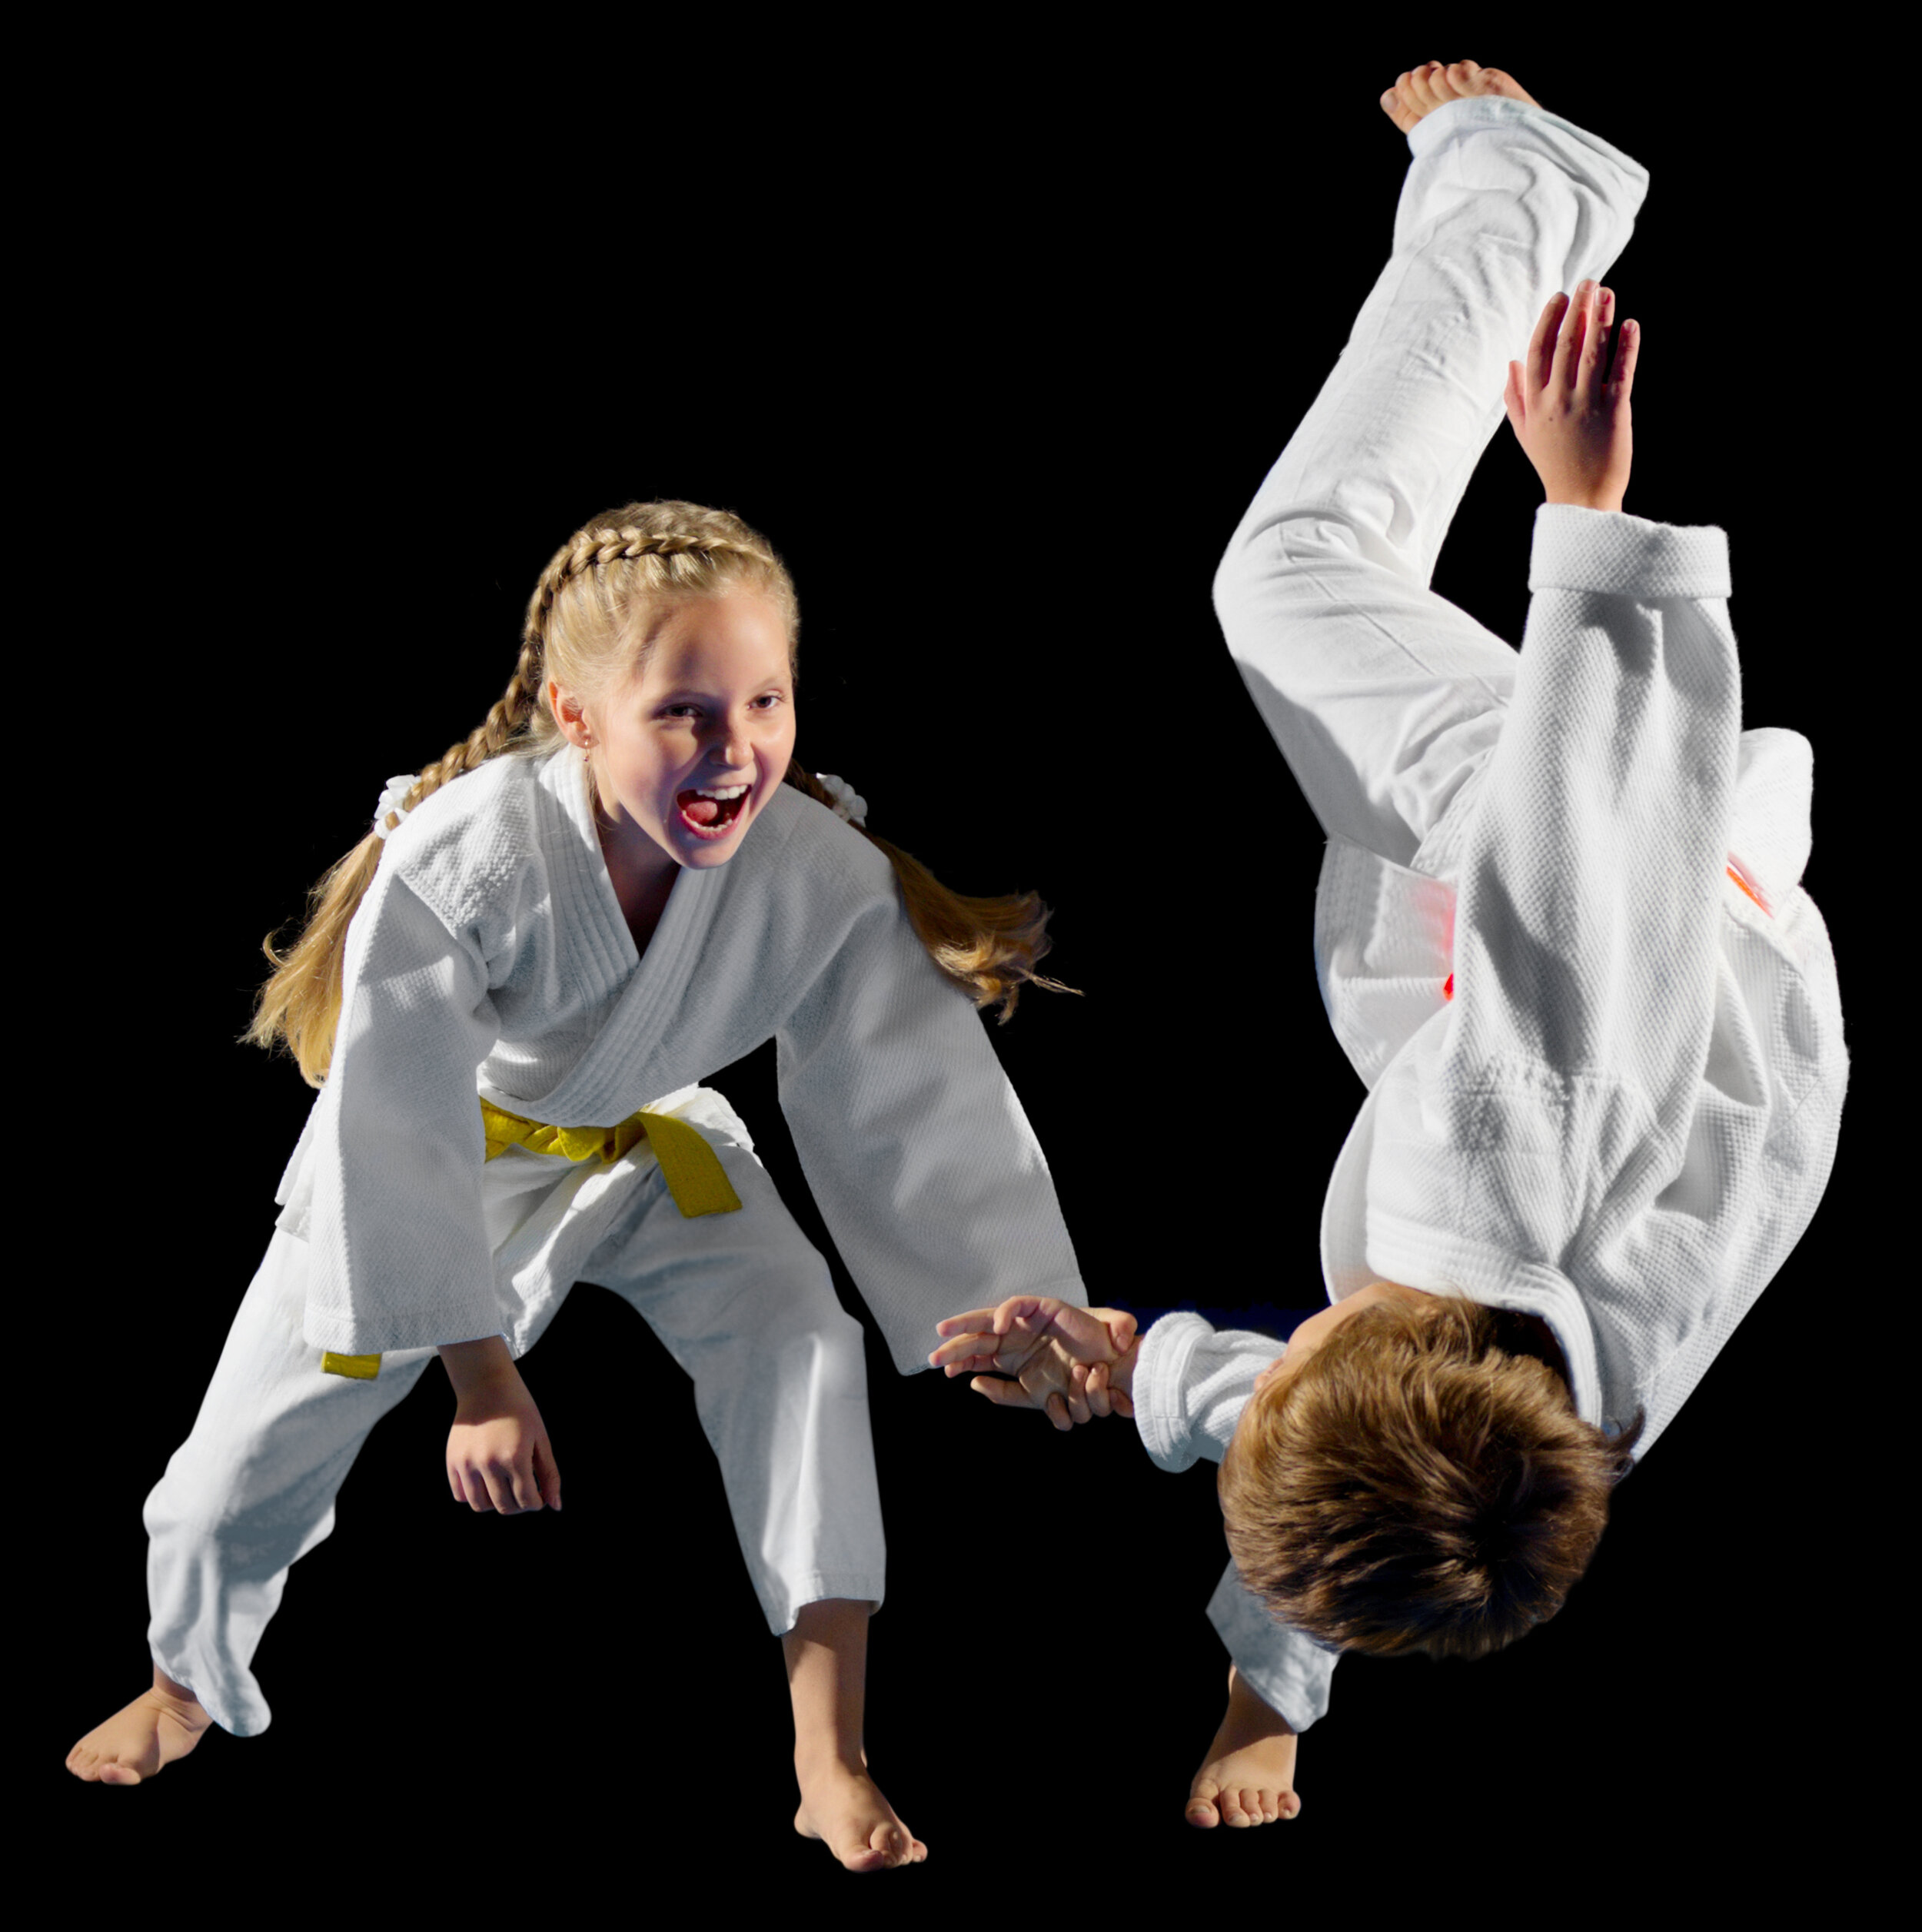 bigstock-Children-martial-arts-fighters-200650492.jpg